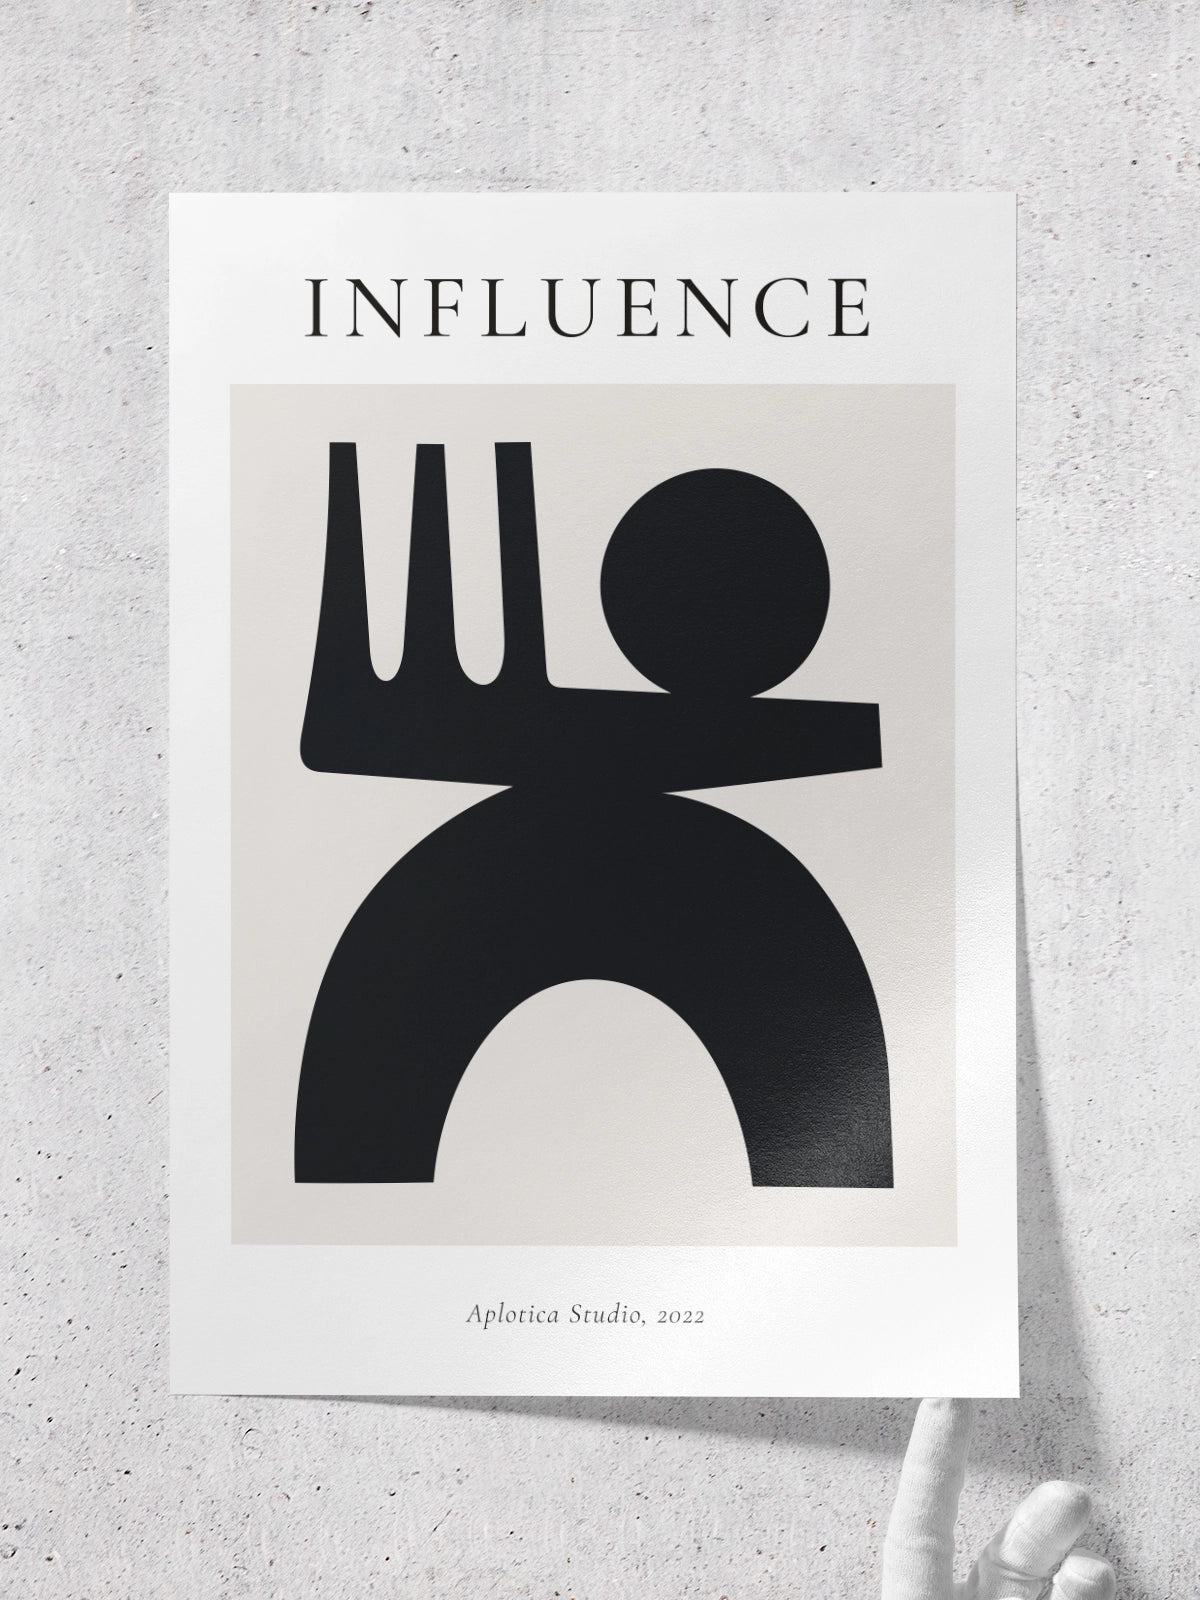 Influence - Una Lámina de Aplotica Studio - Decora tu casa en Nomadart